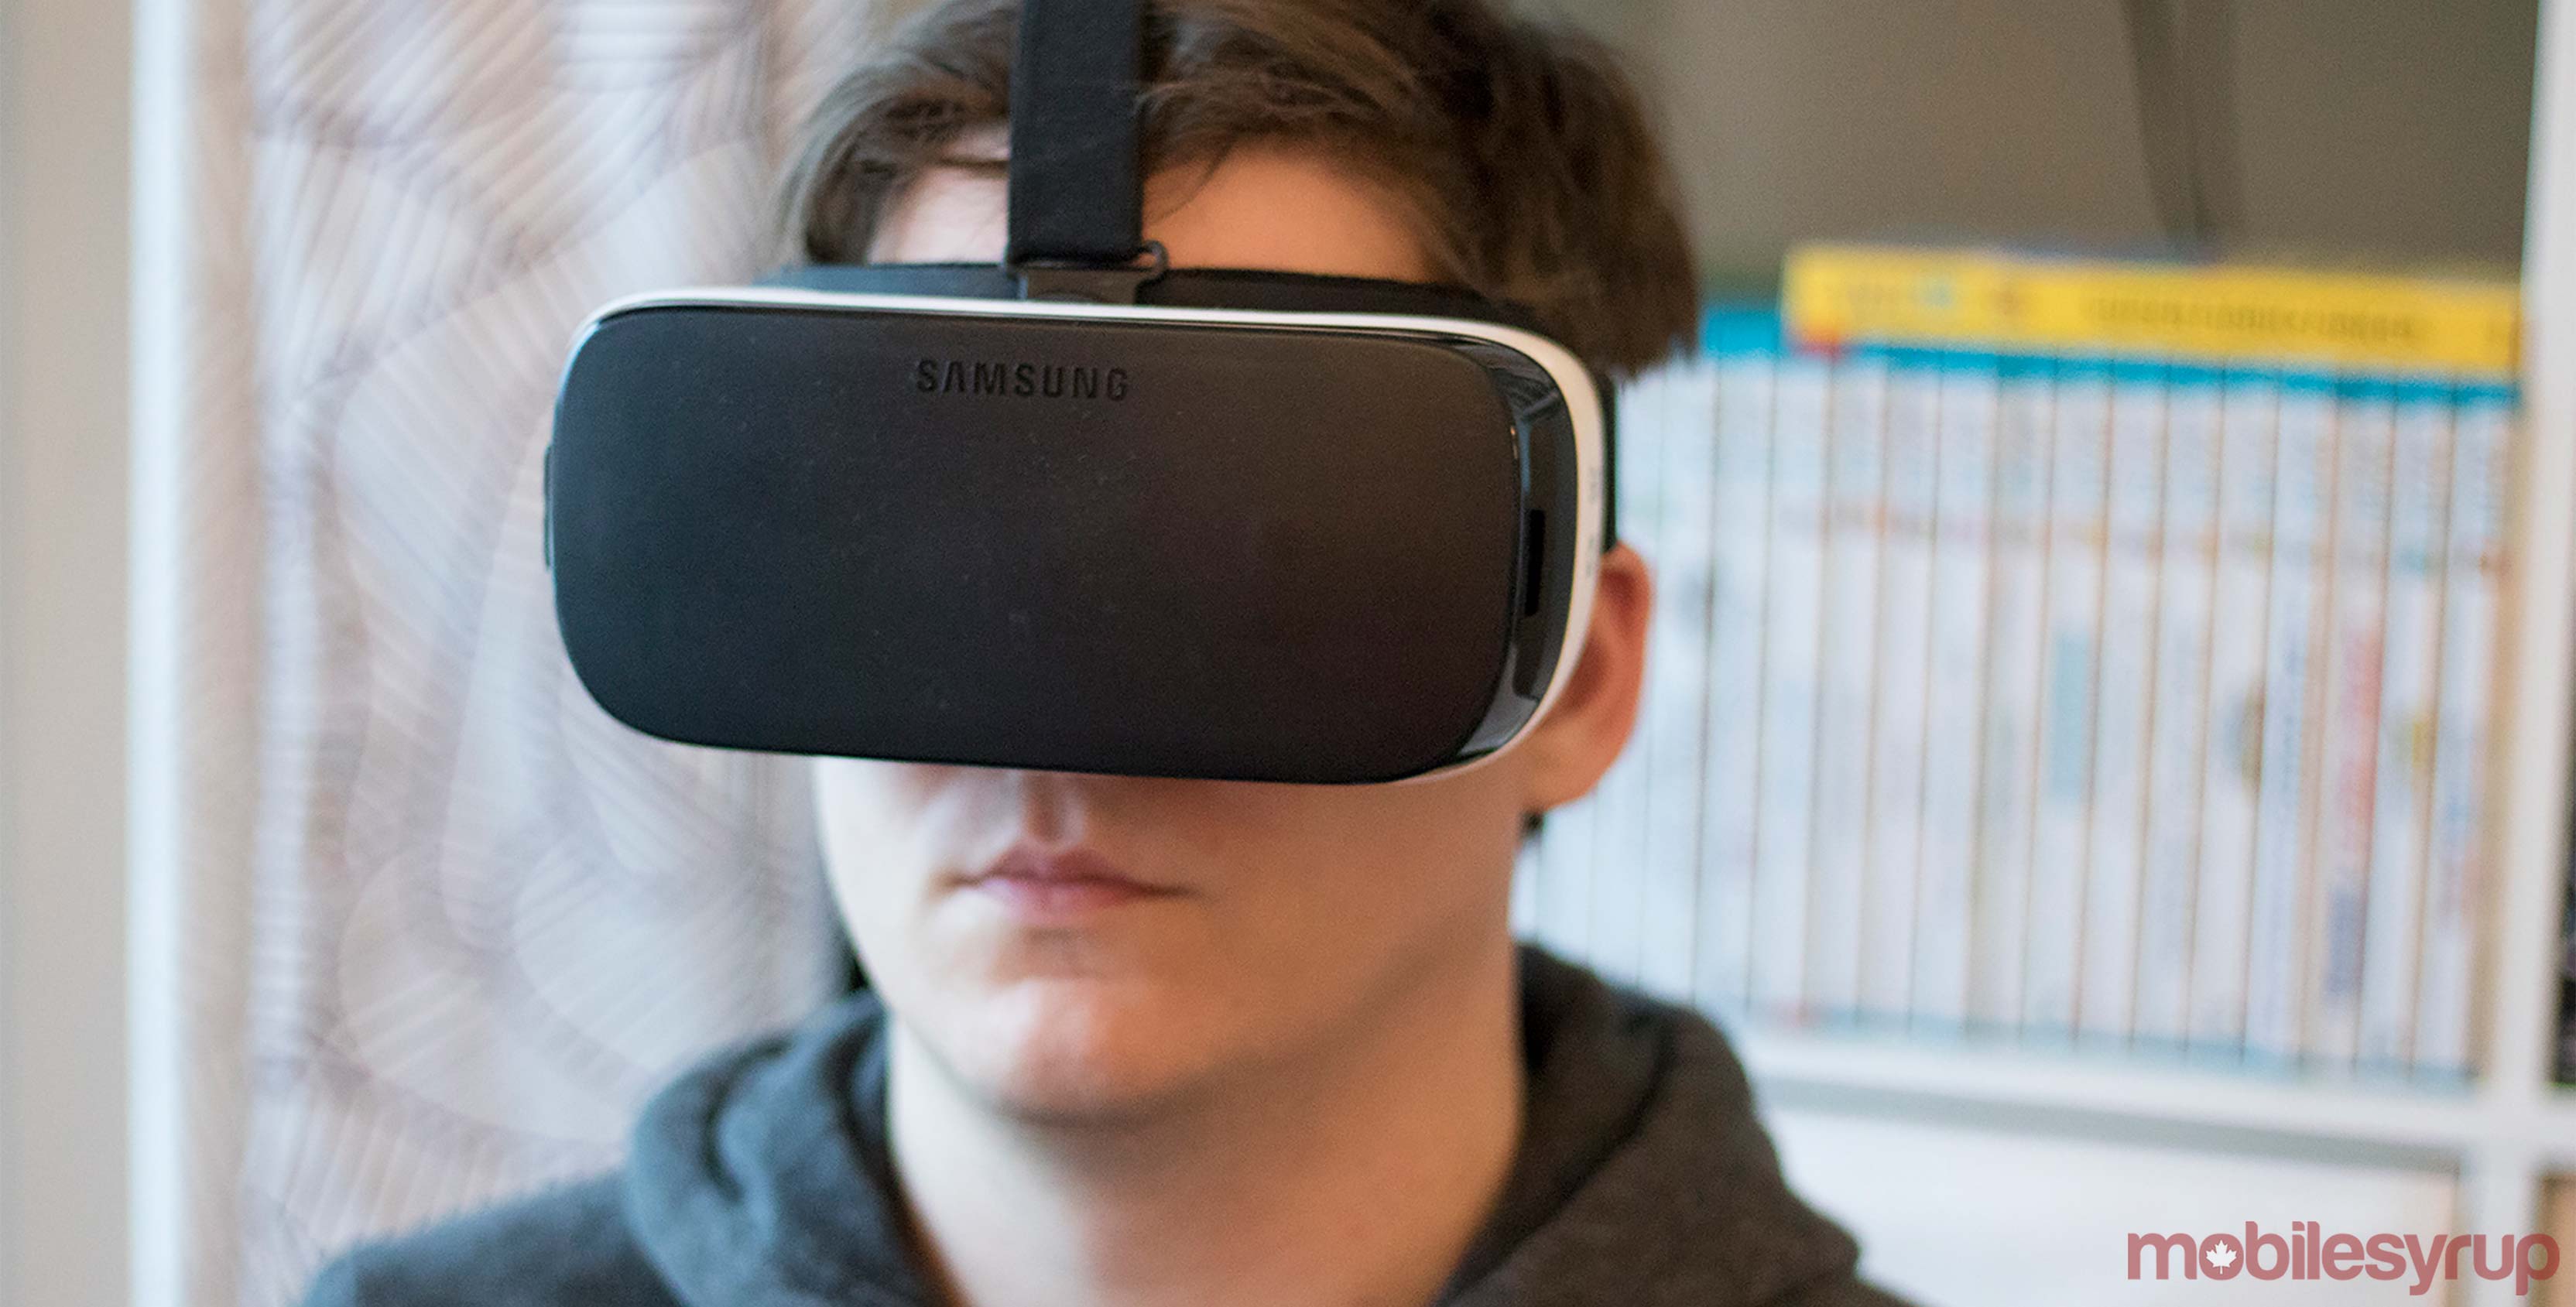 Samsung Gear VR on head